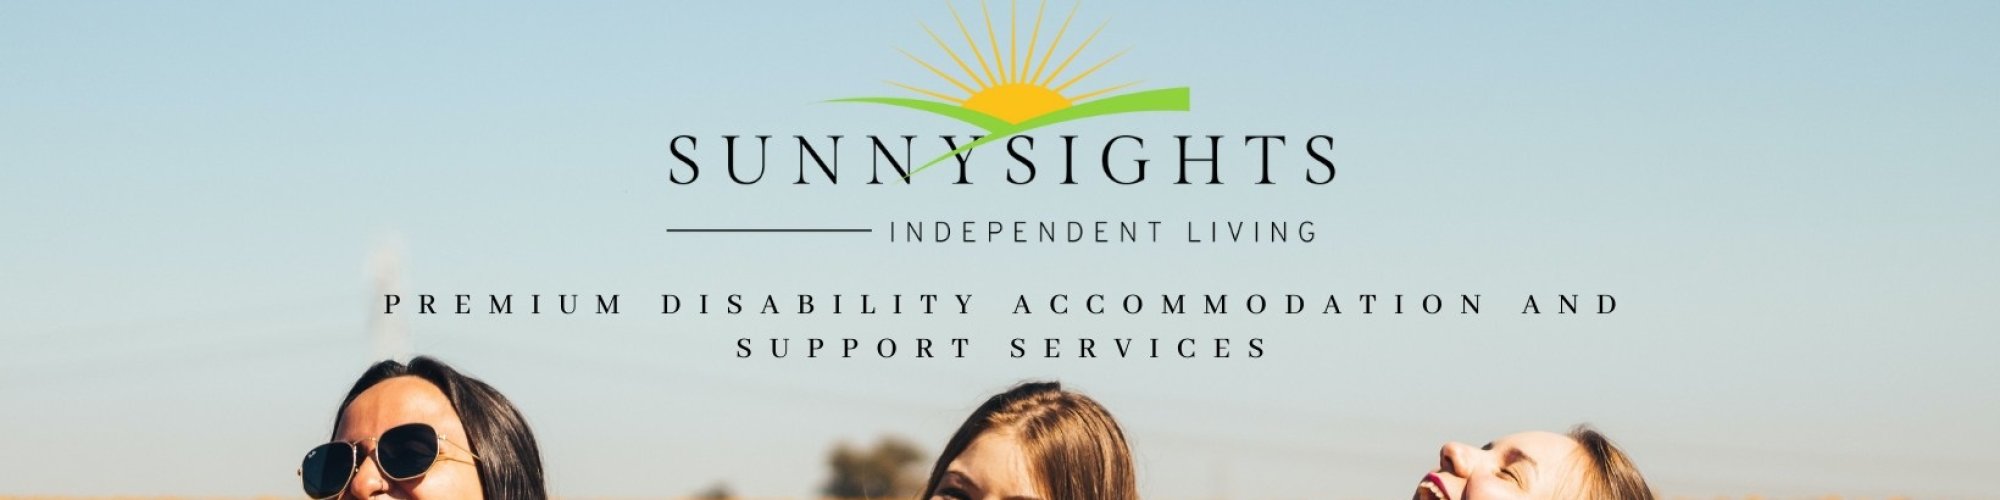 Sunnysights Independent Living